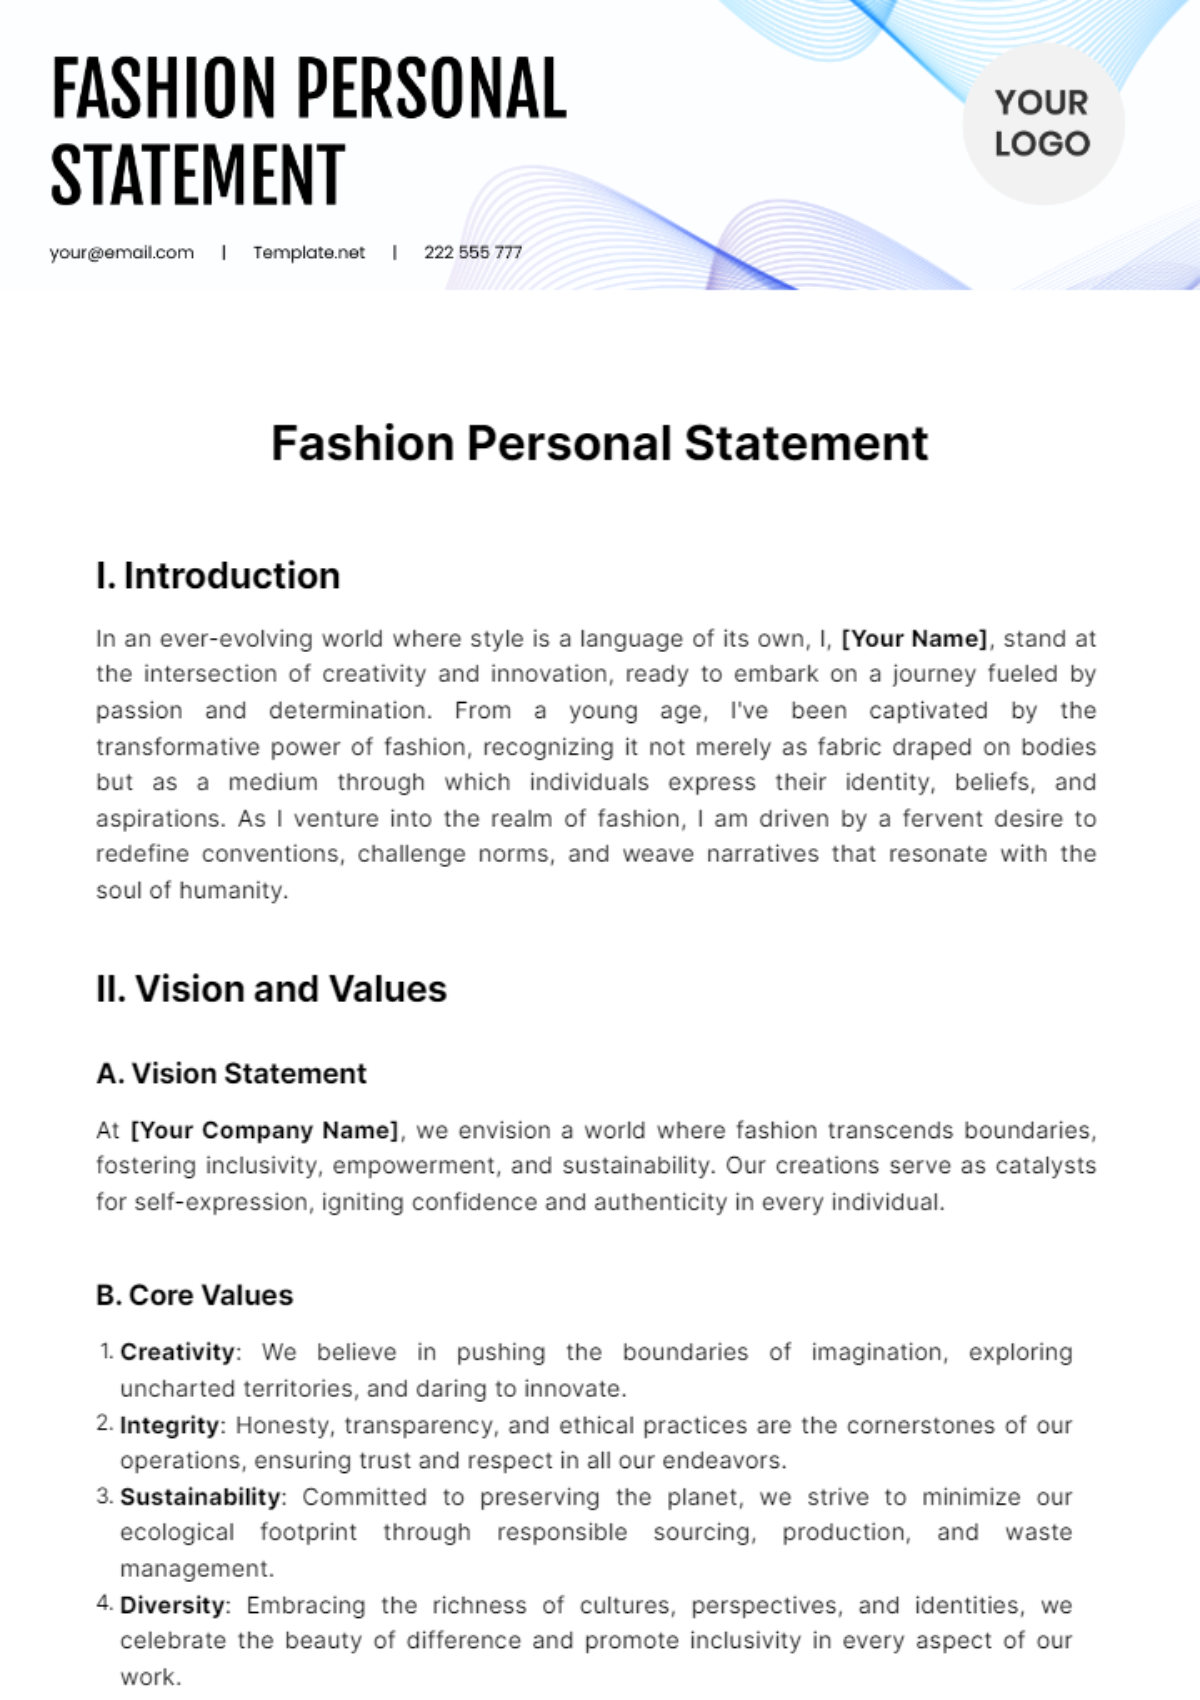 Fashion Personal Statement Template